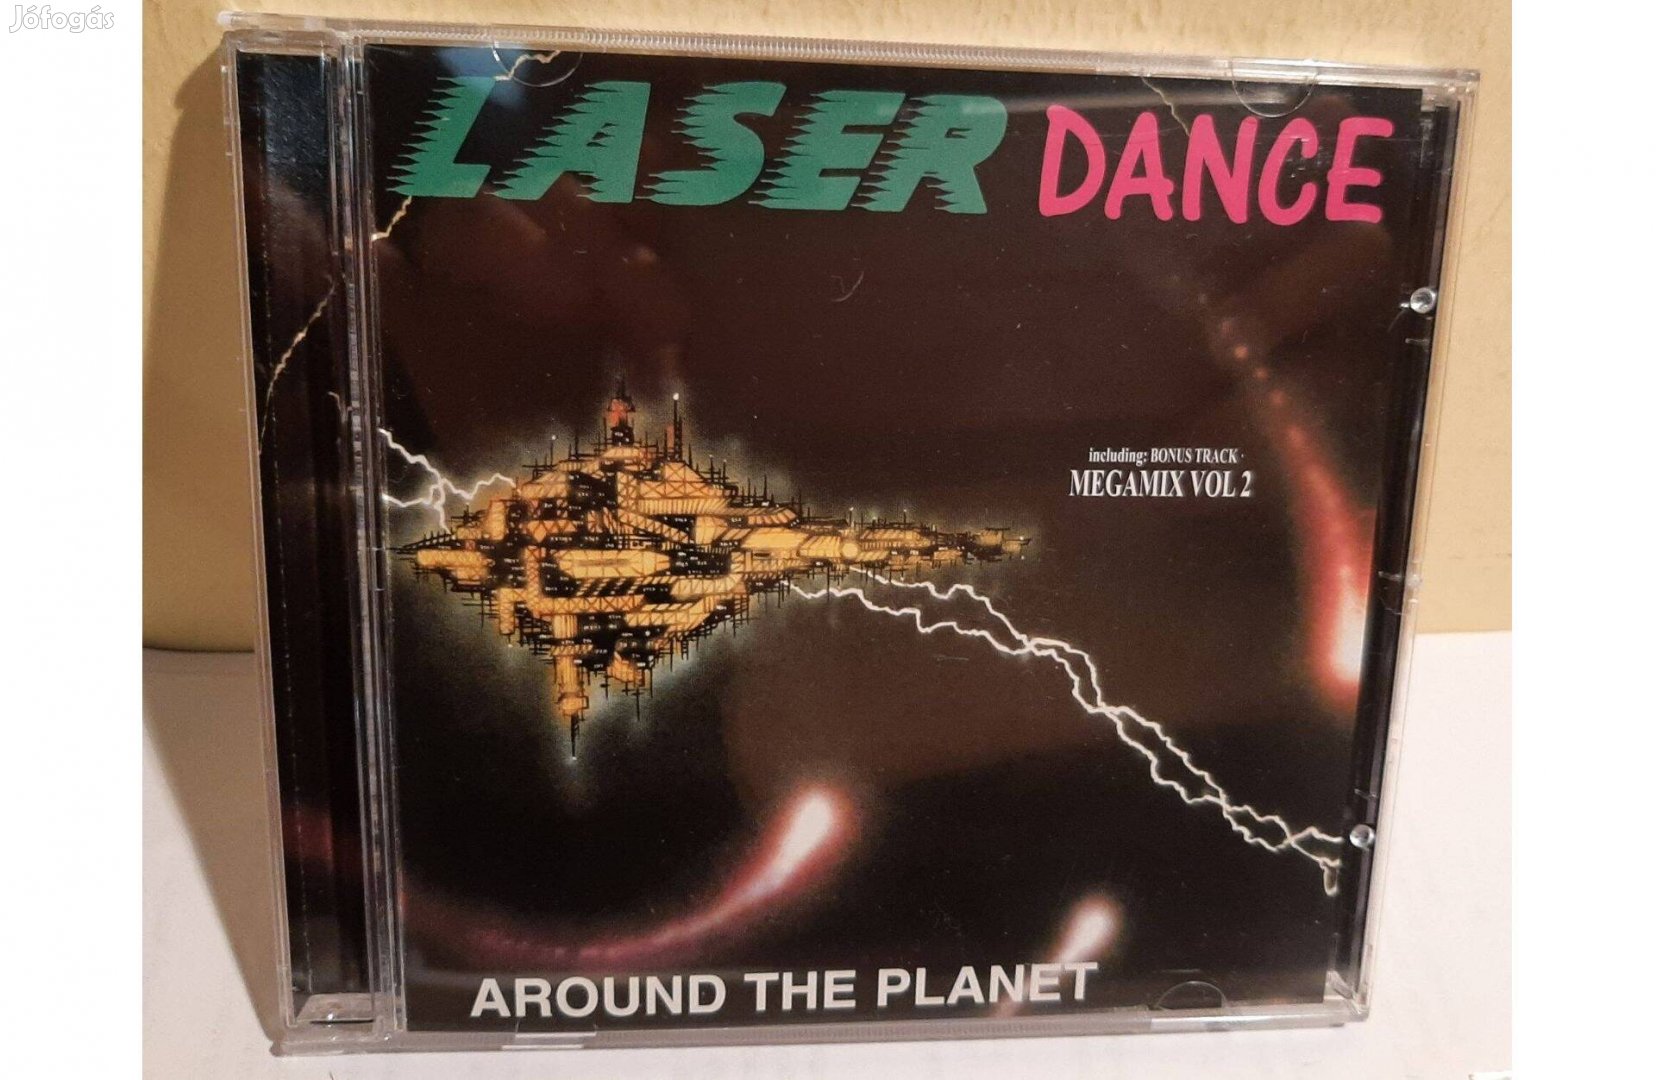 Cd Laser Dance Around The Planet